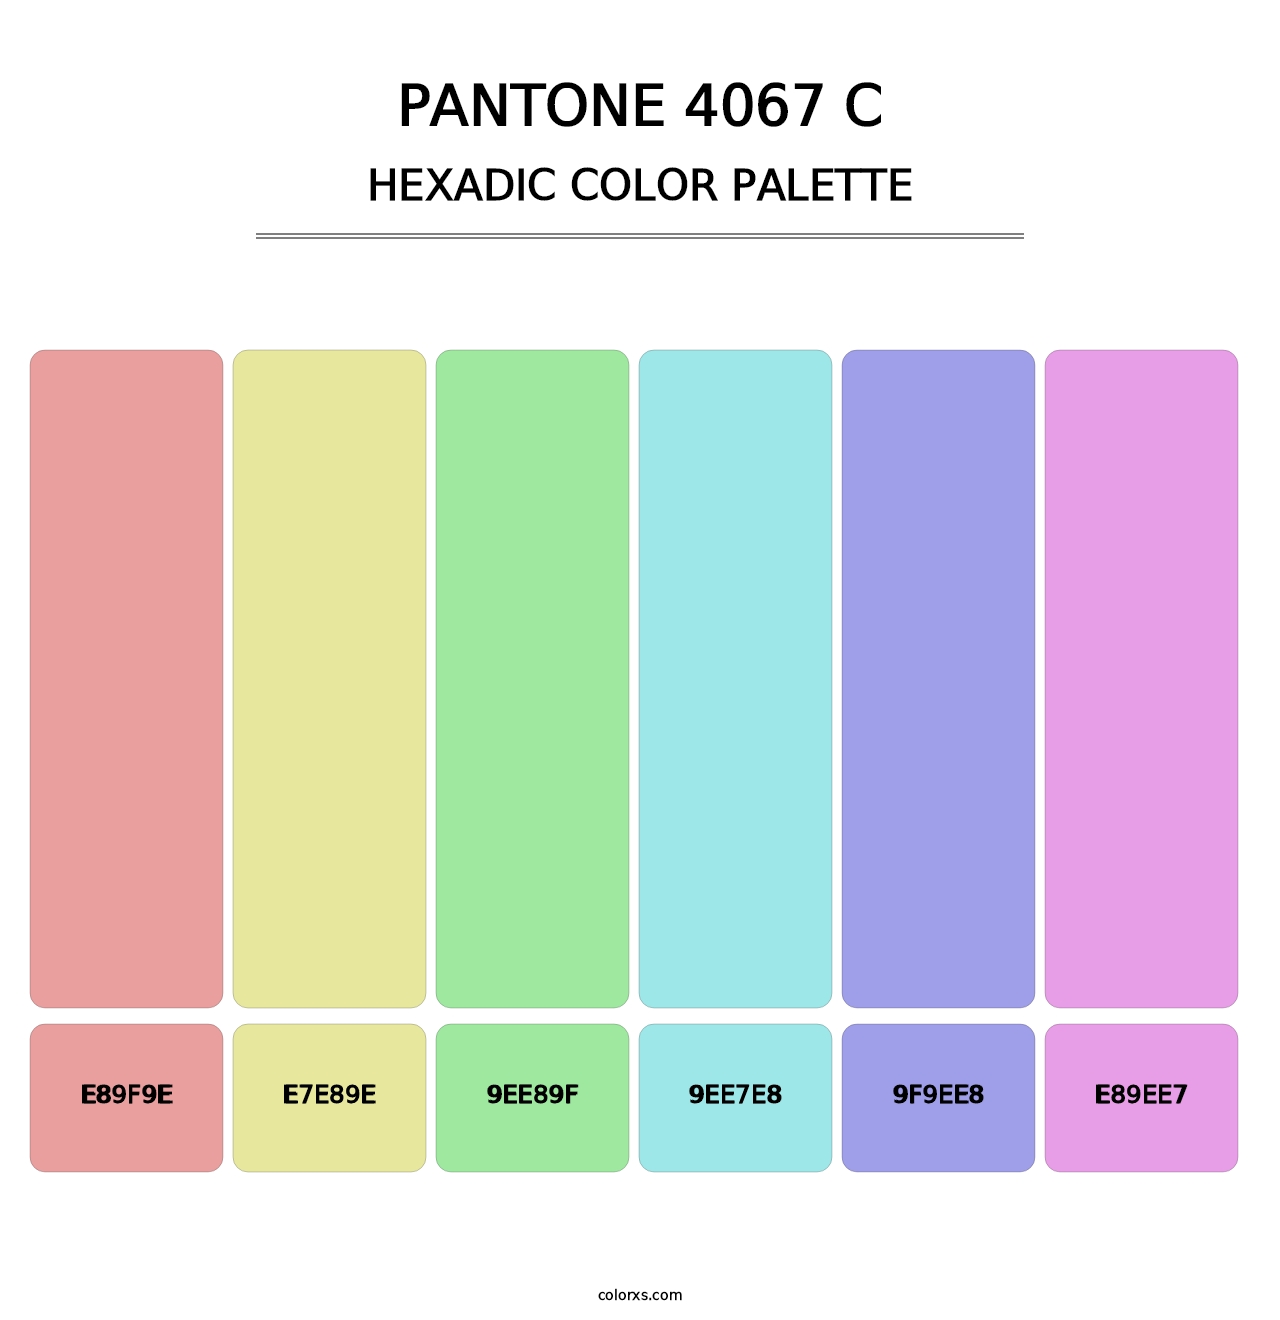 PANTONE 4067 C - Hexadic Color Palette